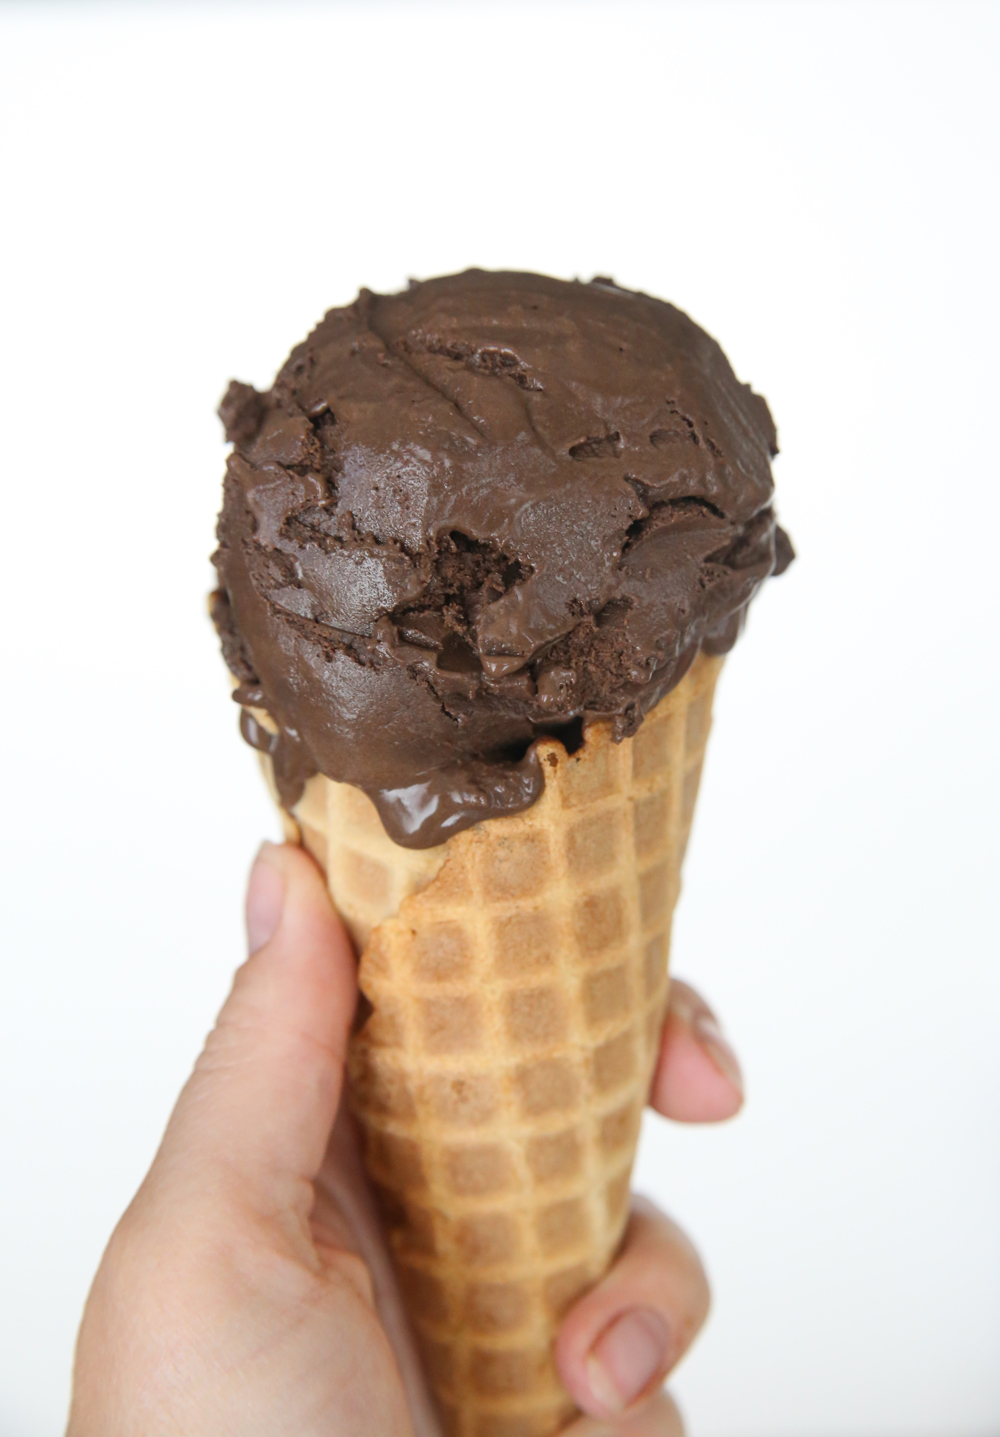 Hand holding dark chocolate fudge ice cream cone